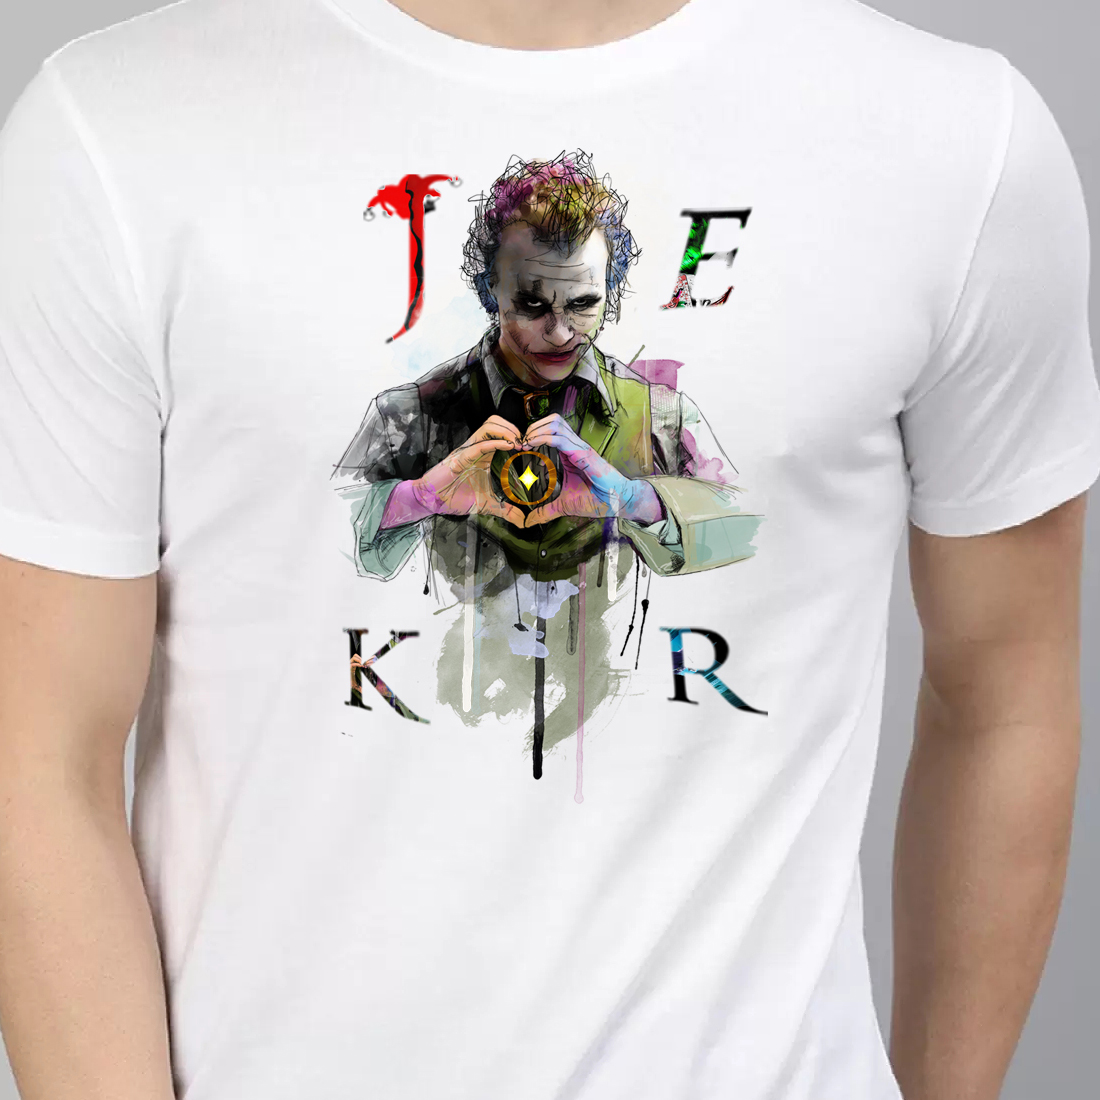 Joker T Shirt Design preview image.